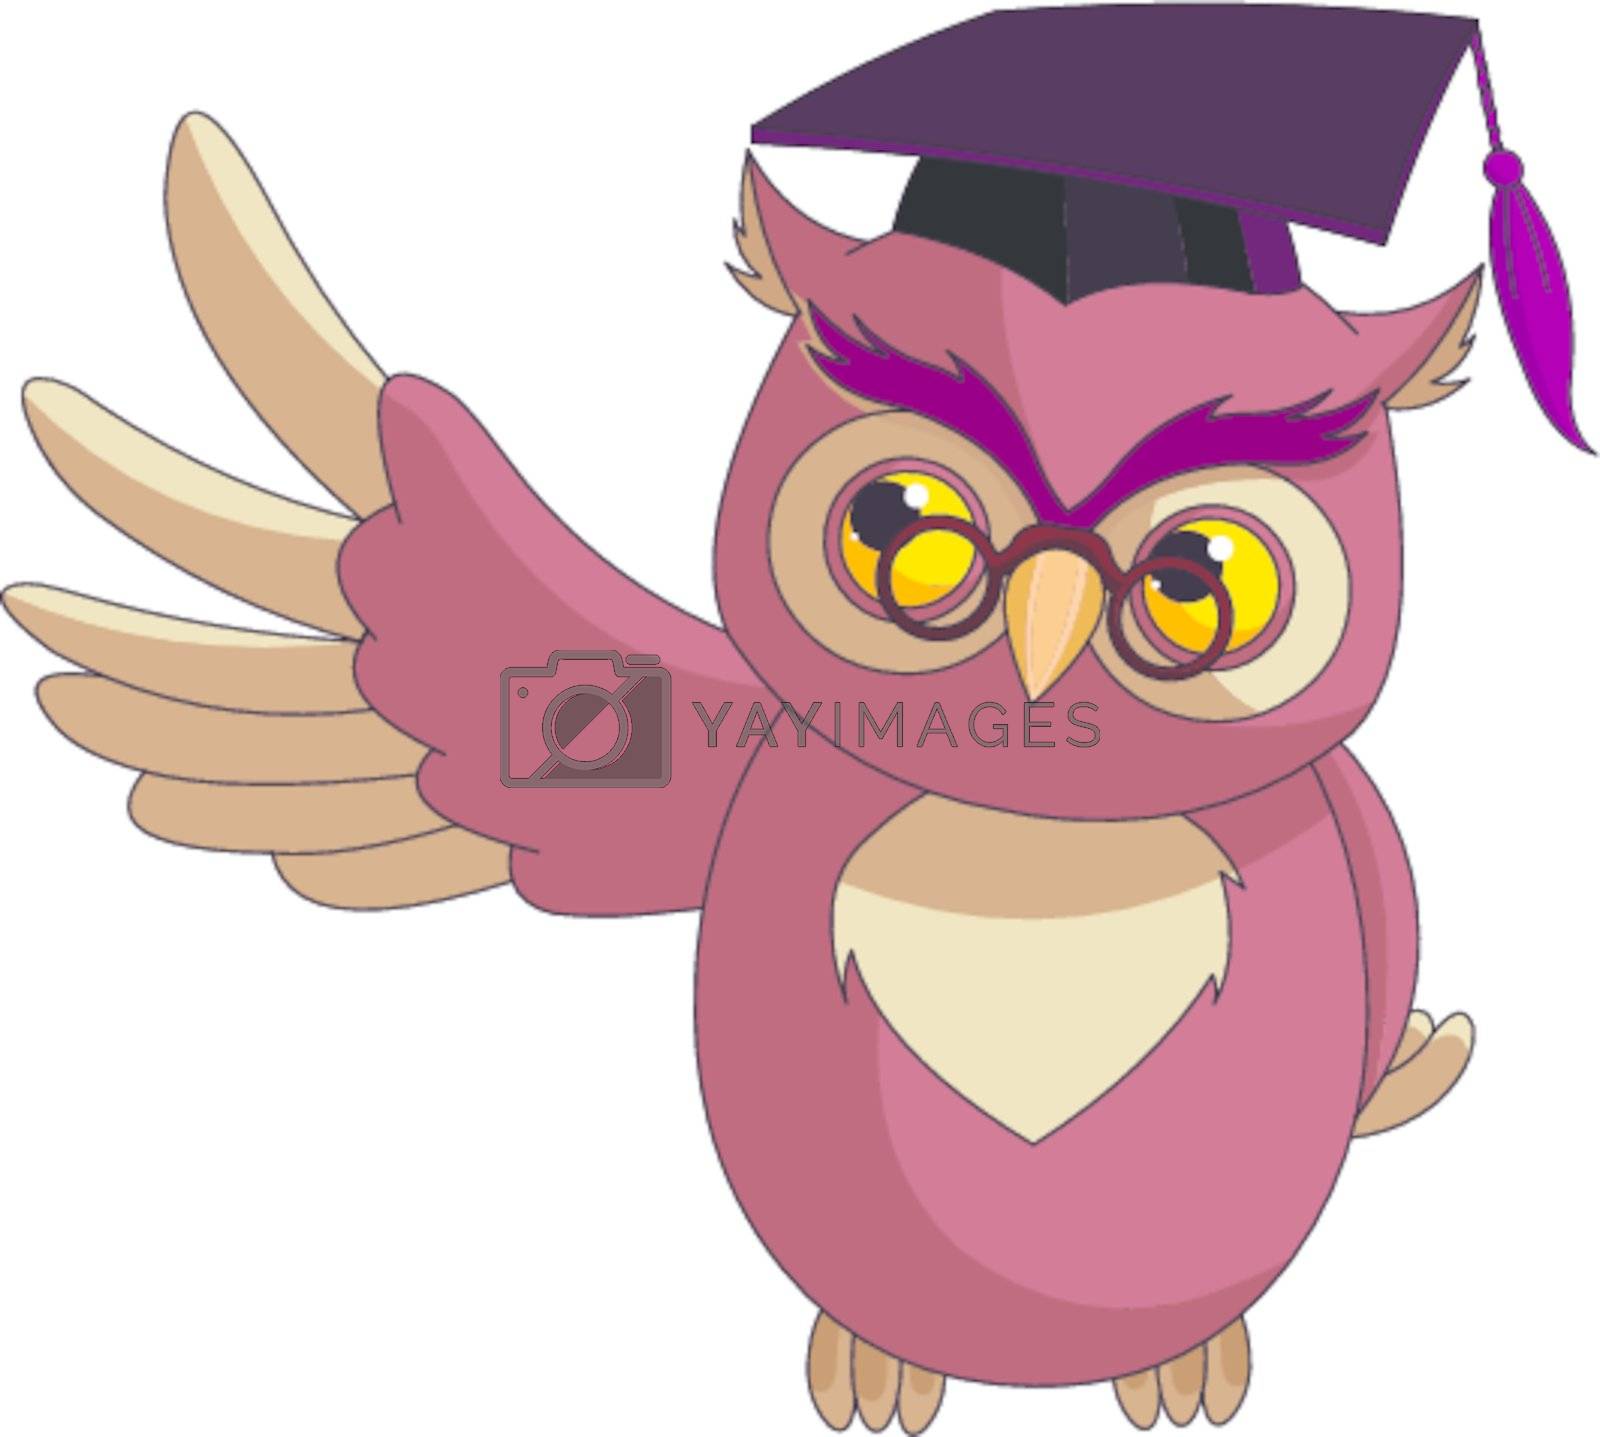 Royalty Free Vector | Cartoon Wise Owl with graduation cap by Dazdraperma